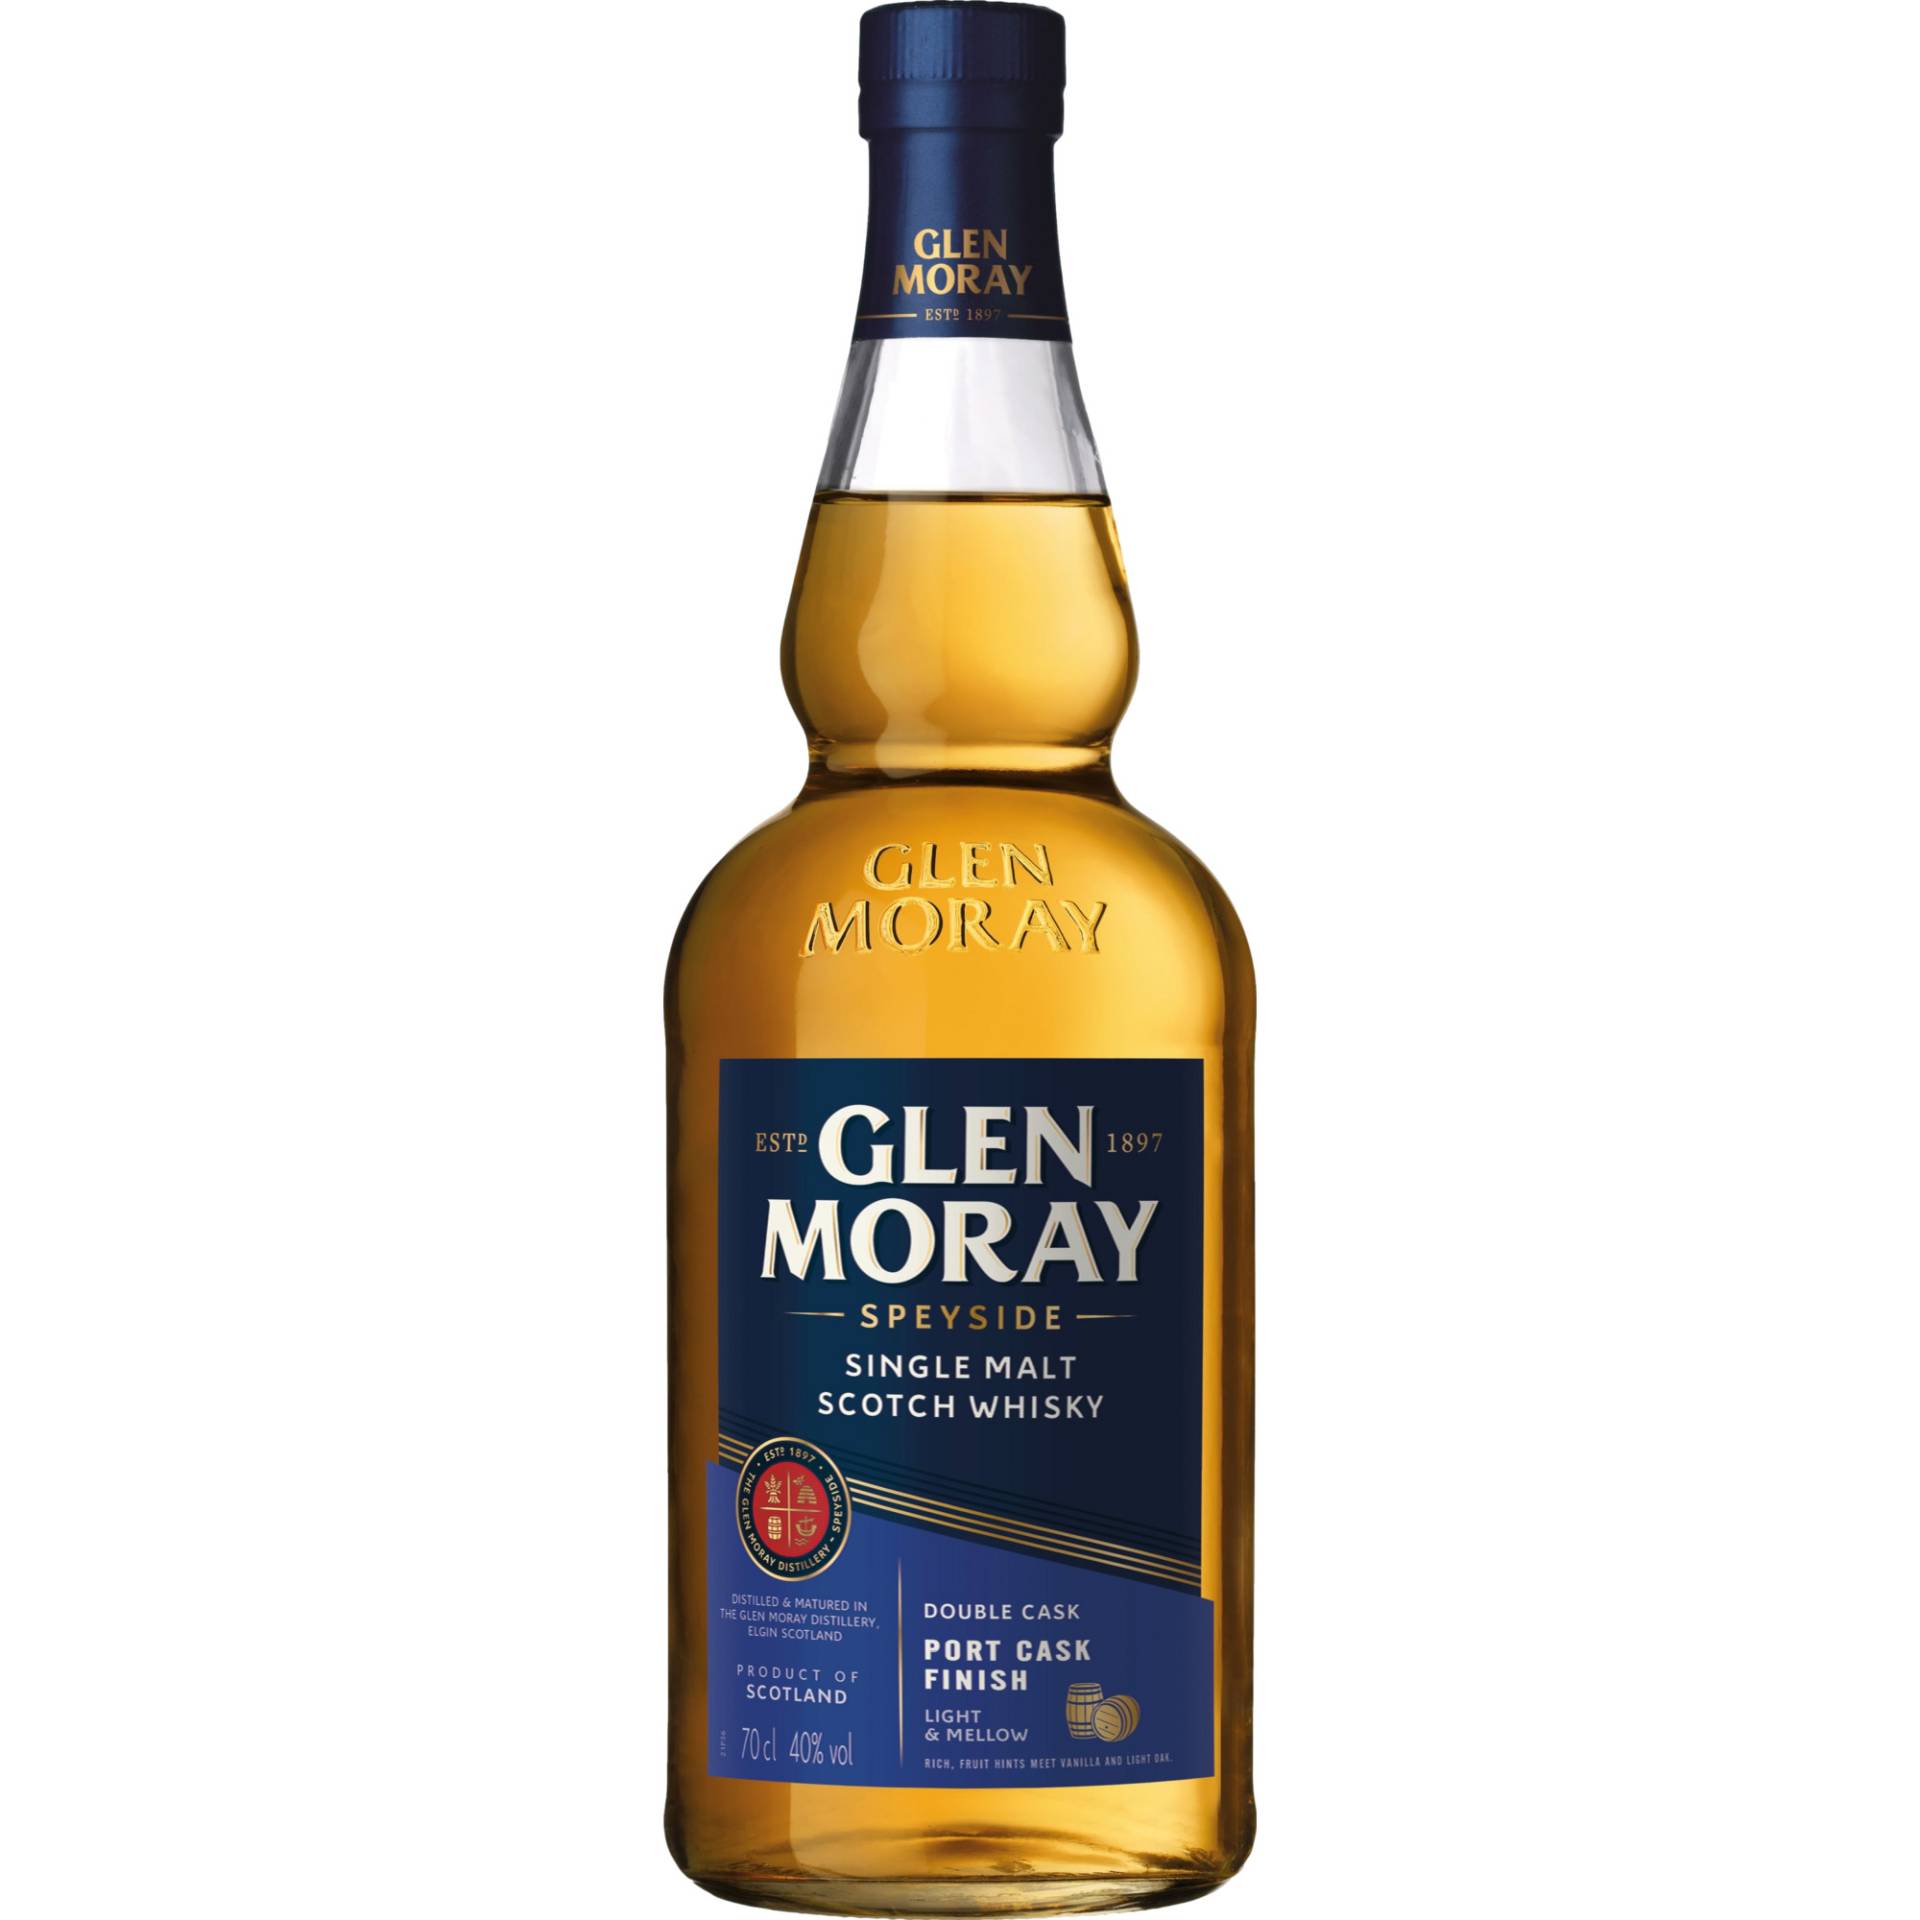 Glen Moray Speyside Single Malt Whisky, Scotch, 40% Vol, 0,7l, Spirituosen von Glen Moray Customer Service Société des Vins et Spiritueux LM 94220 Charenton France